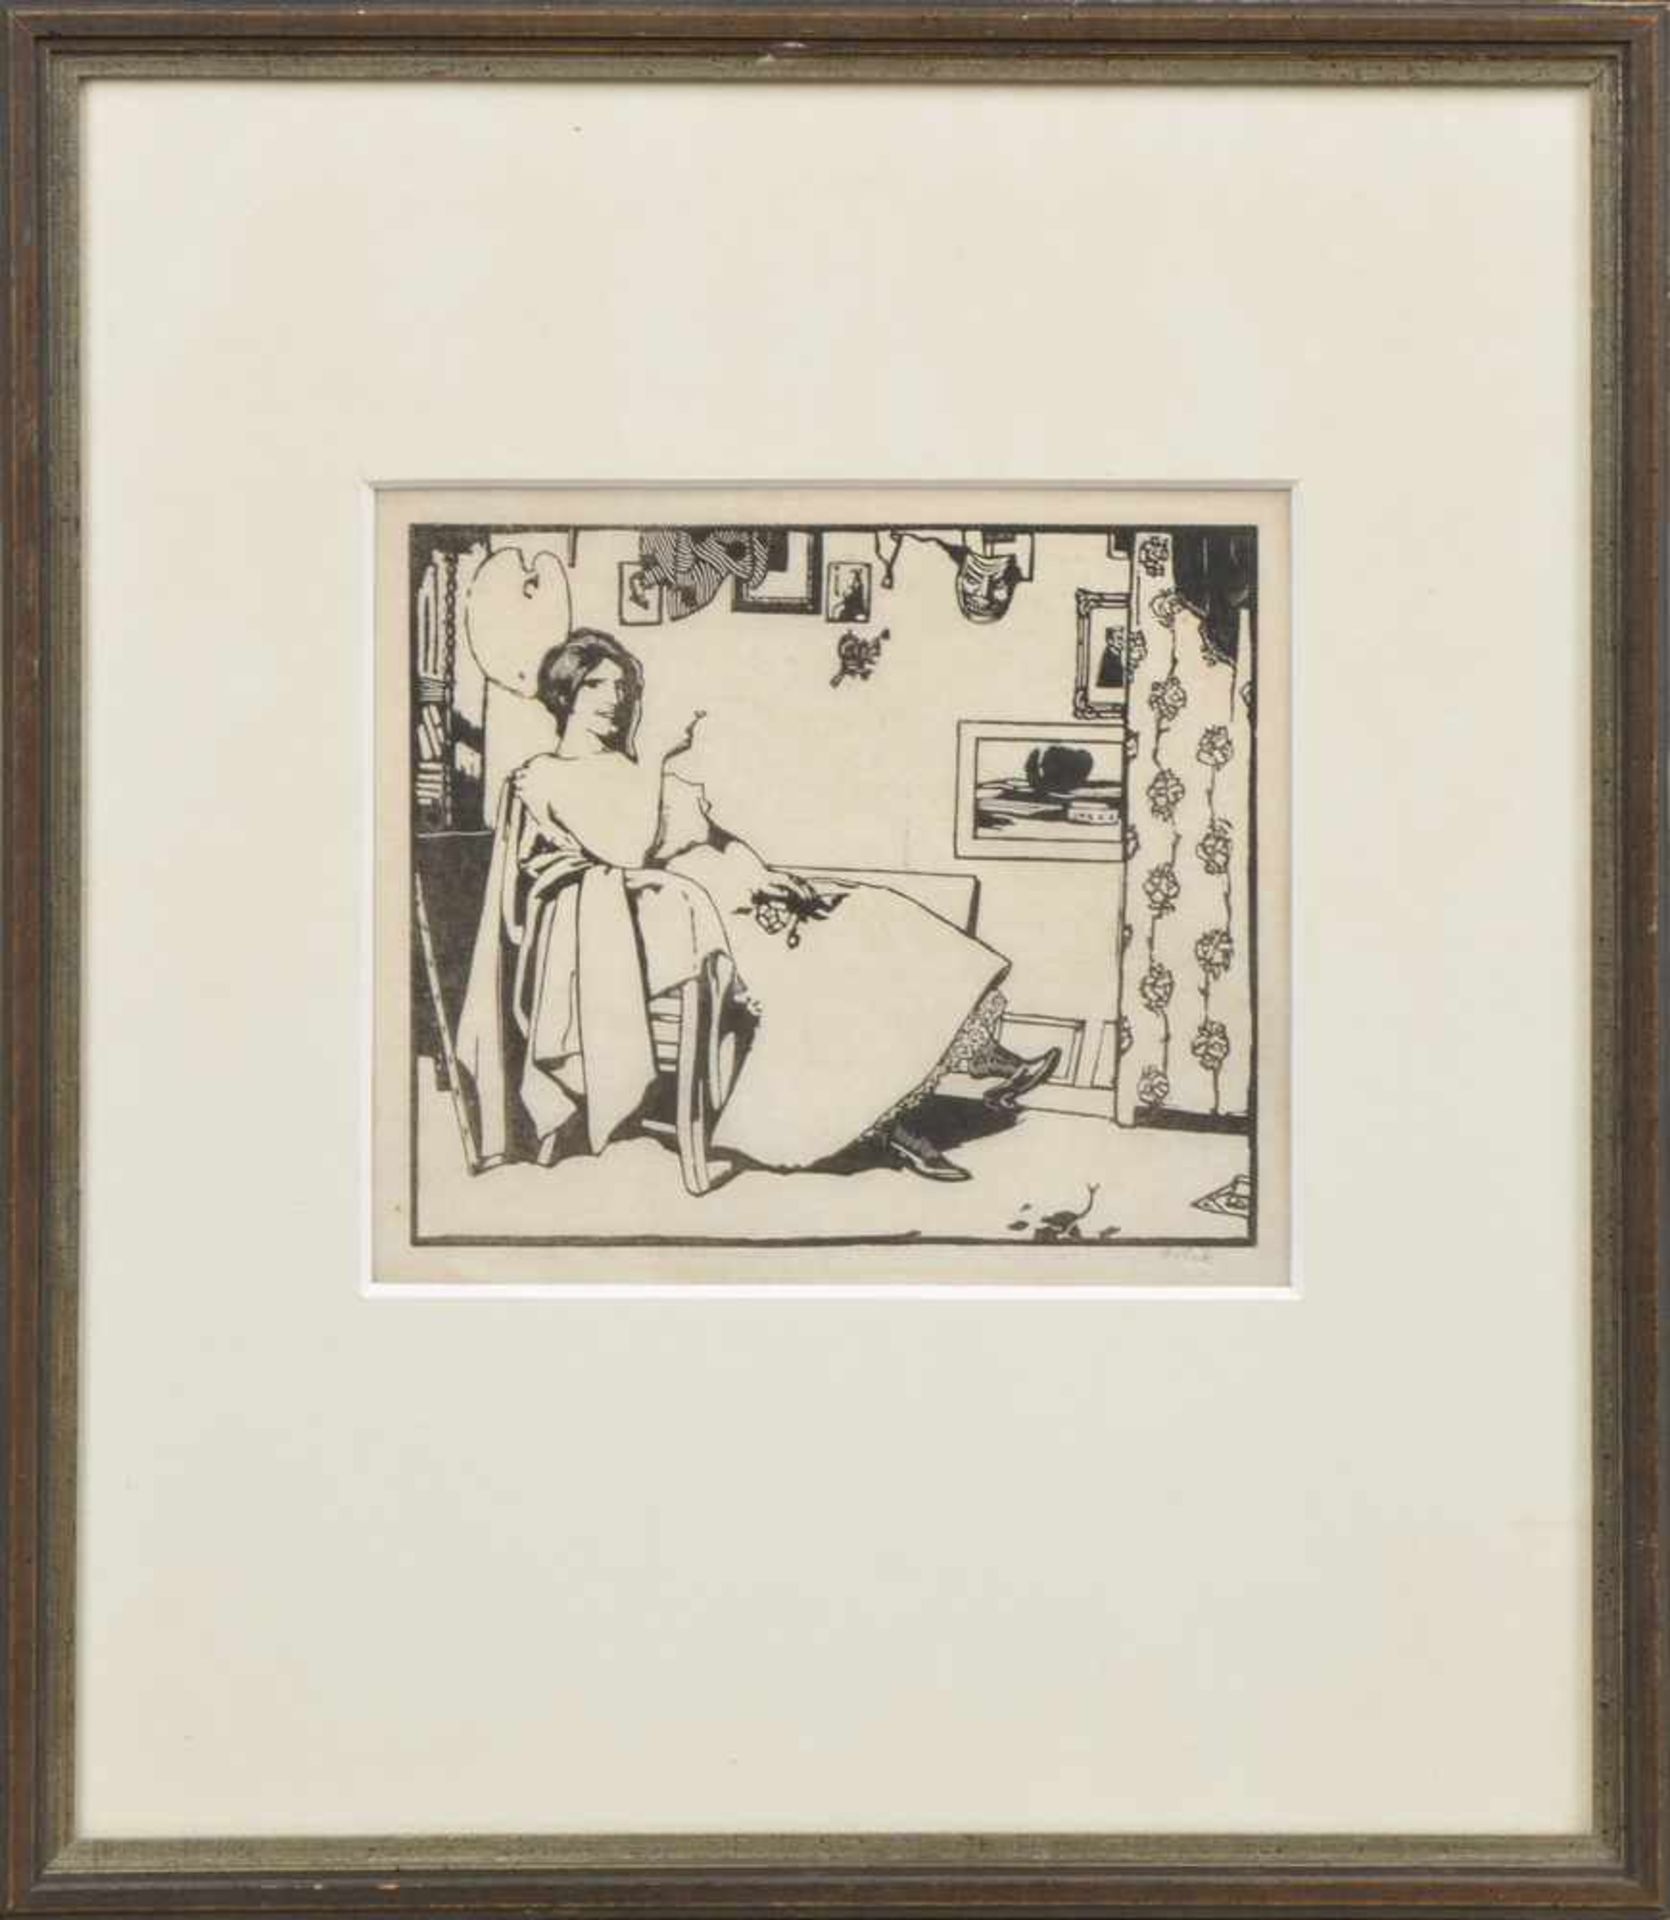 Orlik, Emil (1870-1932) "Rauchendes Modell in Atelier" 1899, Linolschnitt/Probedruck, u.r.sign., - Image 2 of 2